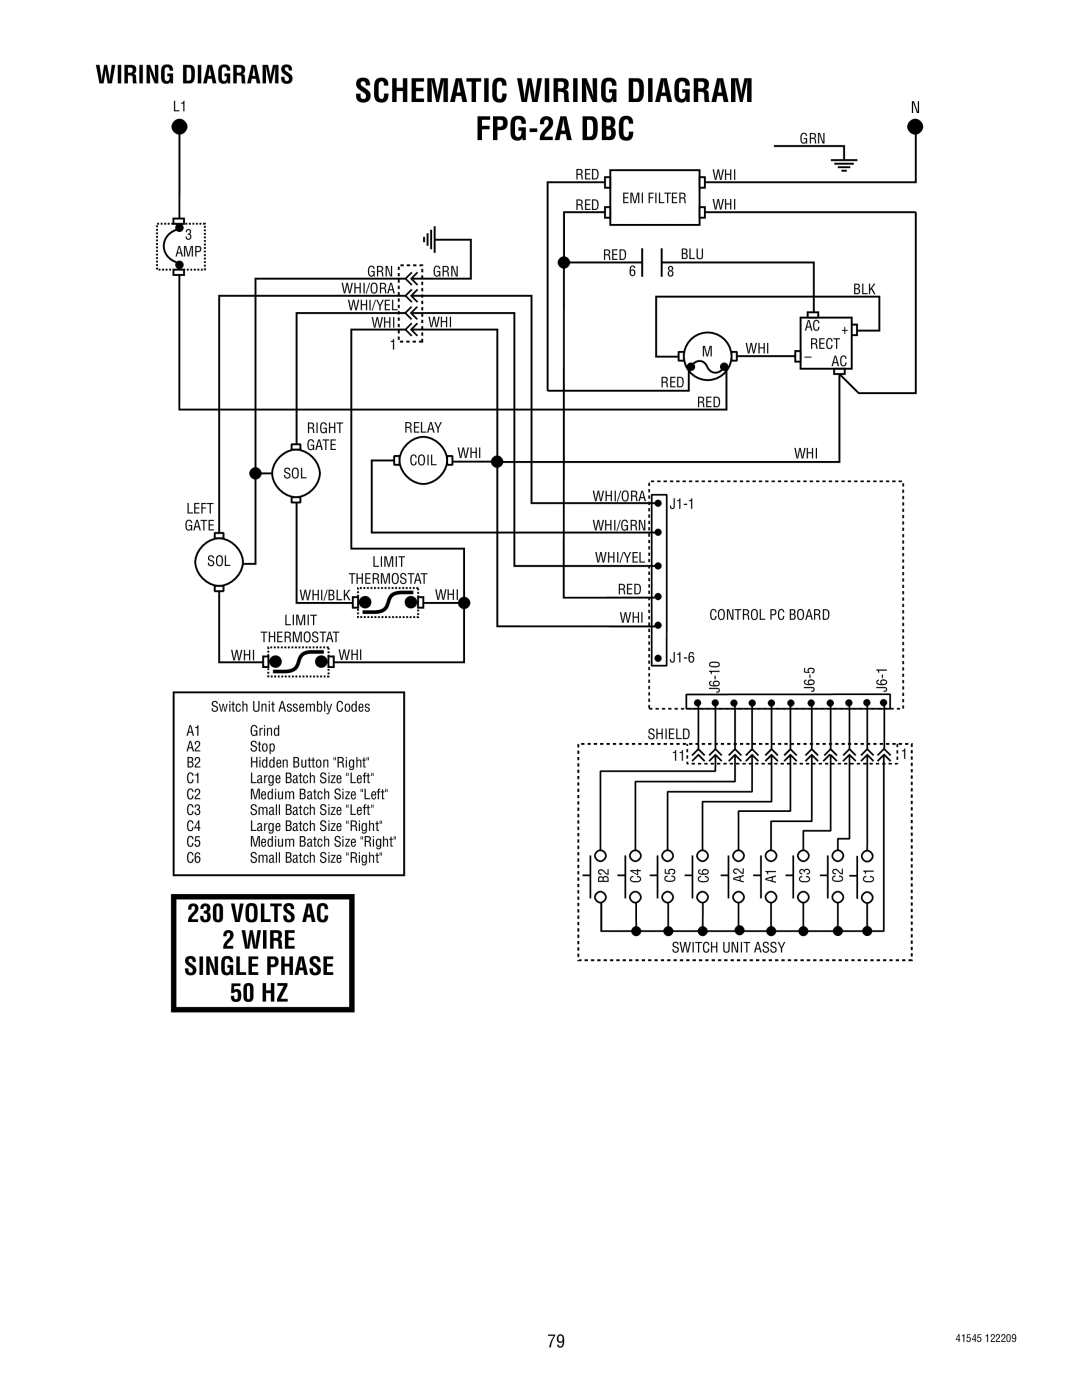 Bunn LPG-2, G9WD, G2 TRIFECTA FPG-2ADBC, Volts Ac, 50 HZ, Schematic Wiring Diagram, Wiring Diagrams, Wire, Single Phase 